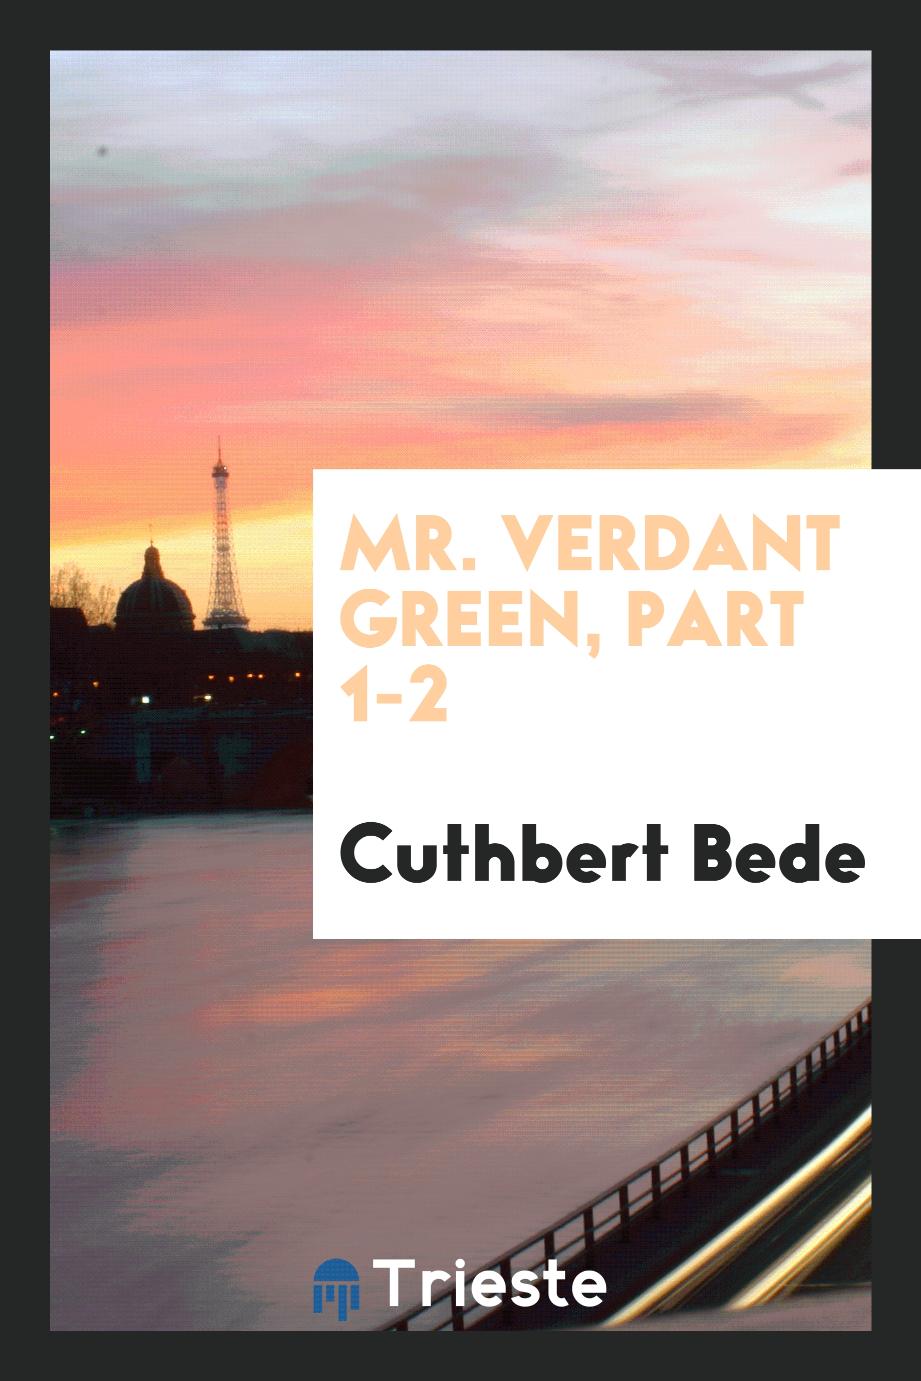 Mr. Verdant Green, Part 1-2